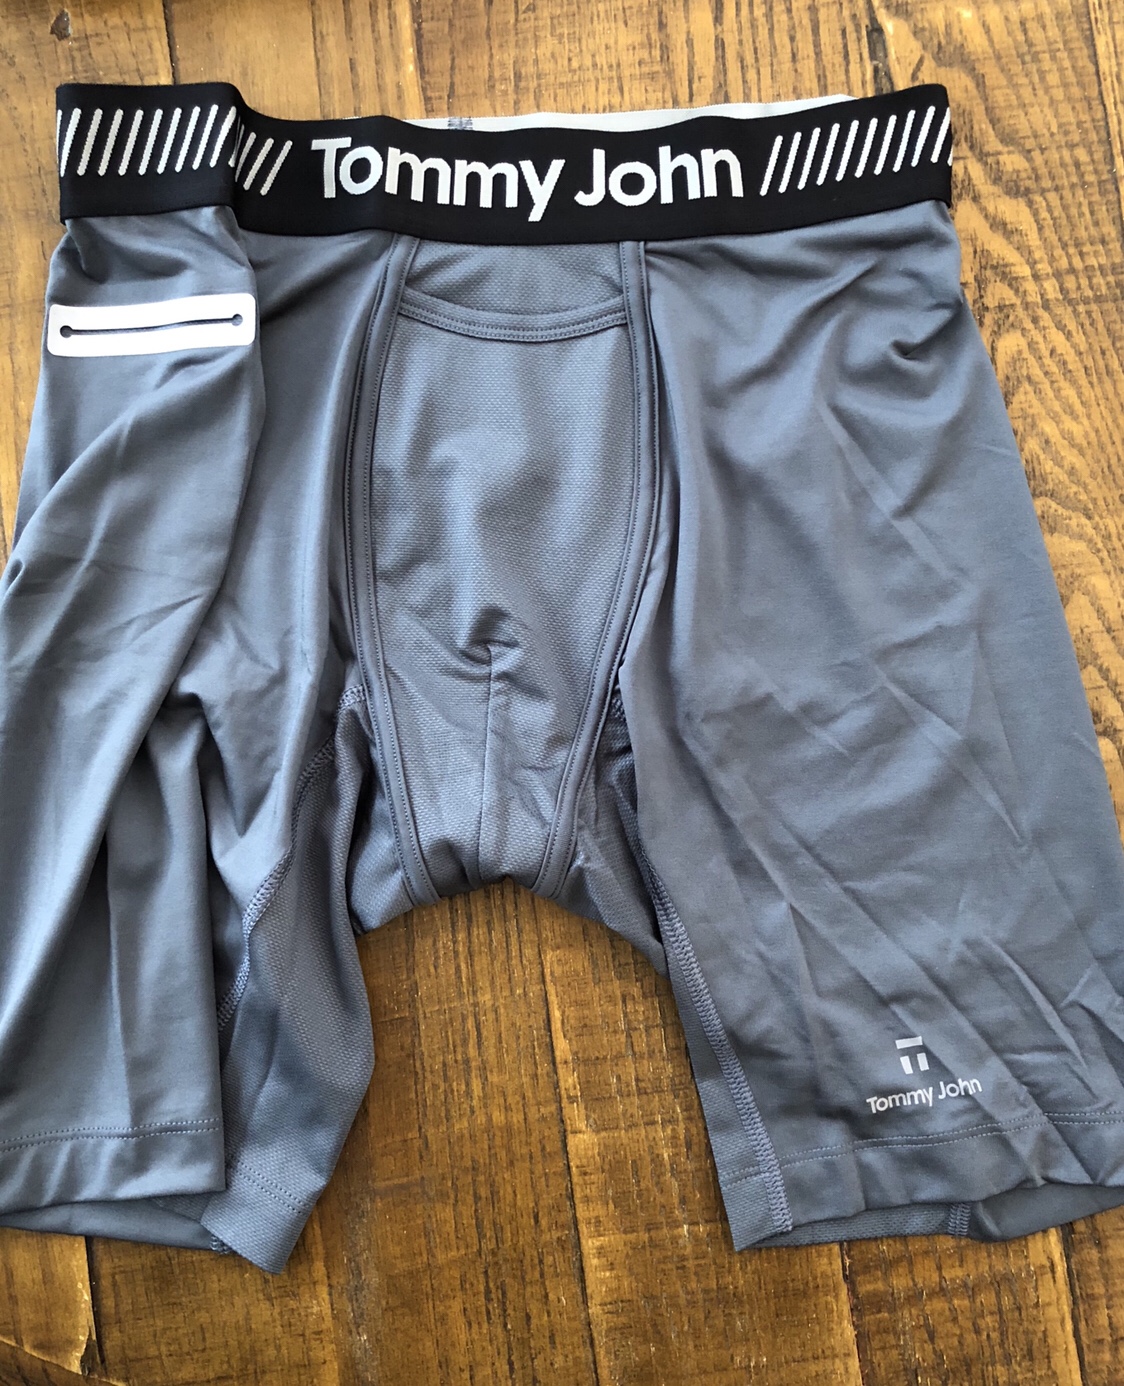 tommy john compression shorts